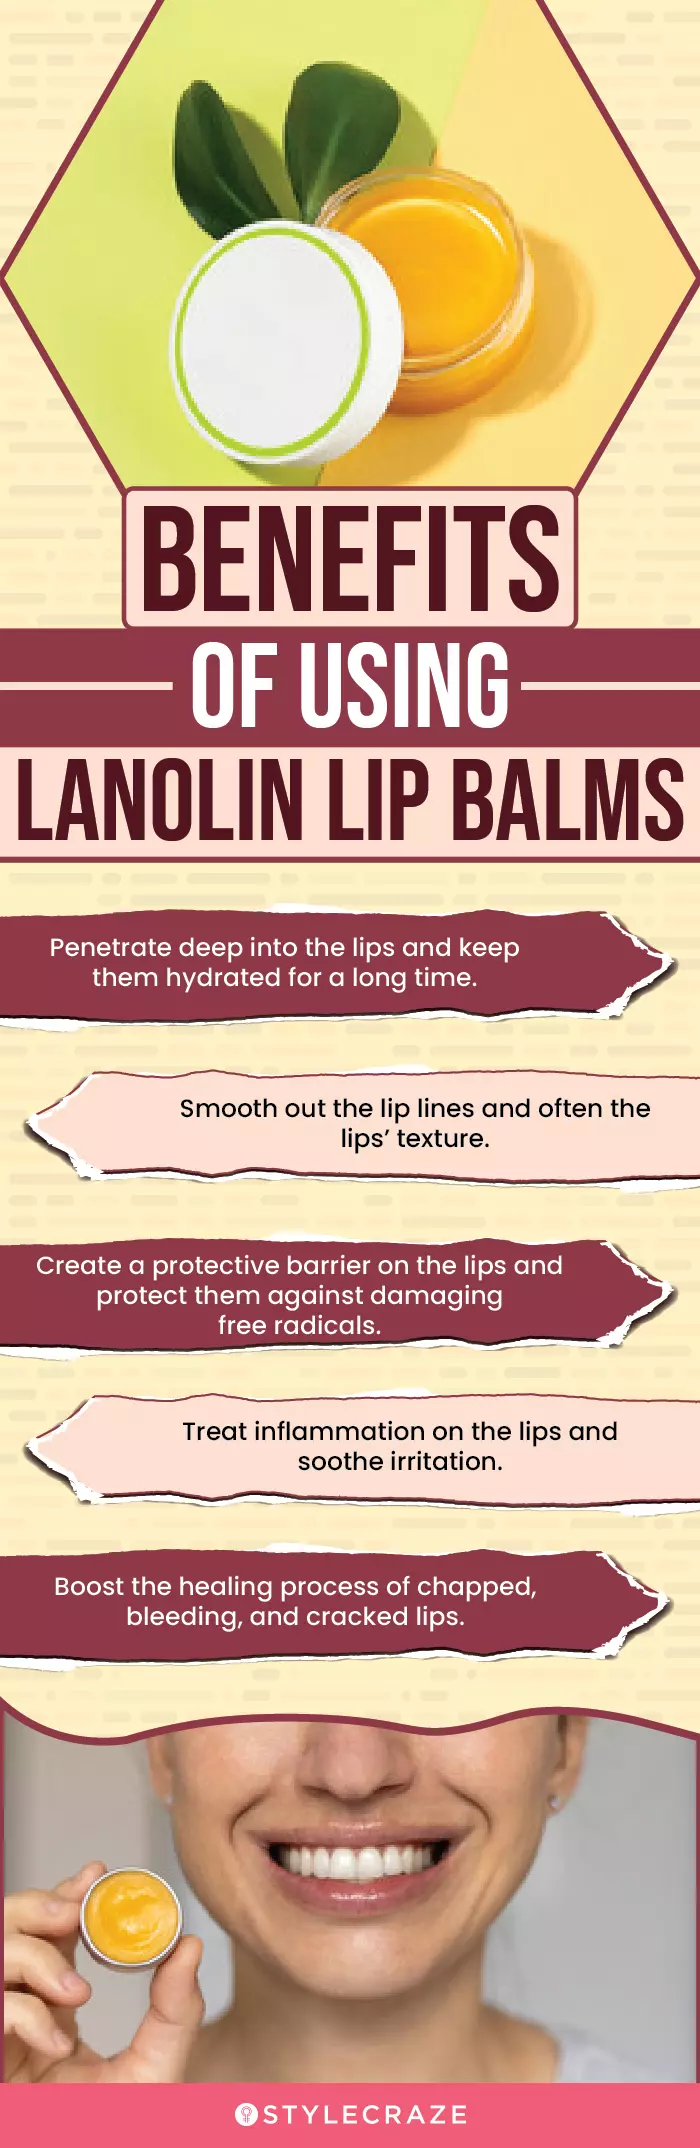 Benefits Of Using Lanolin Lip Balms (infographic)